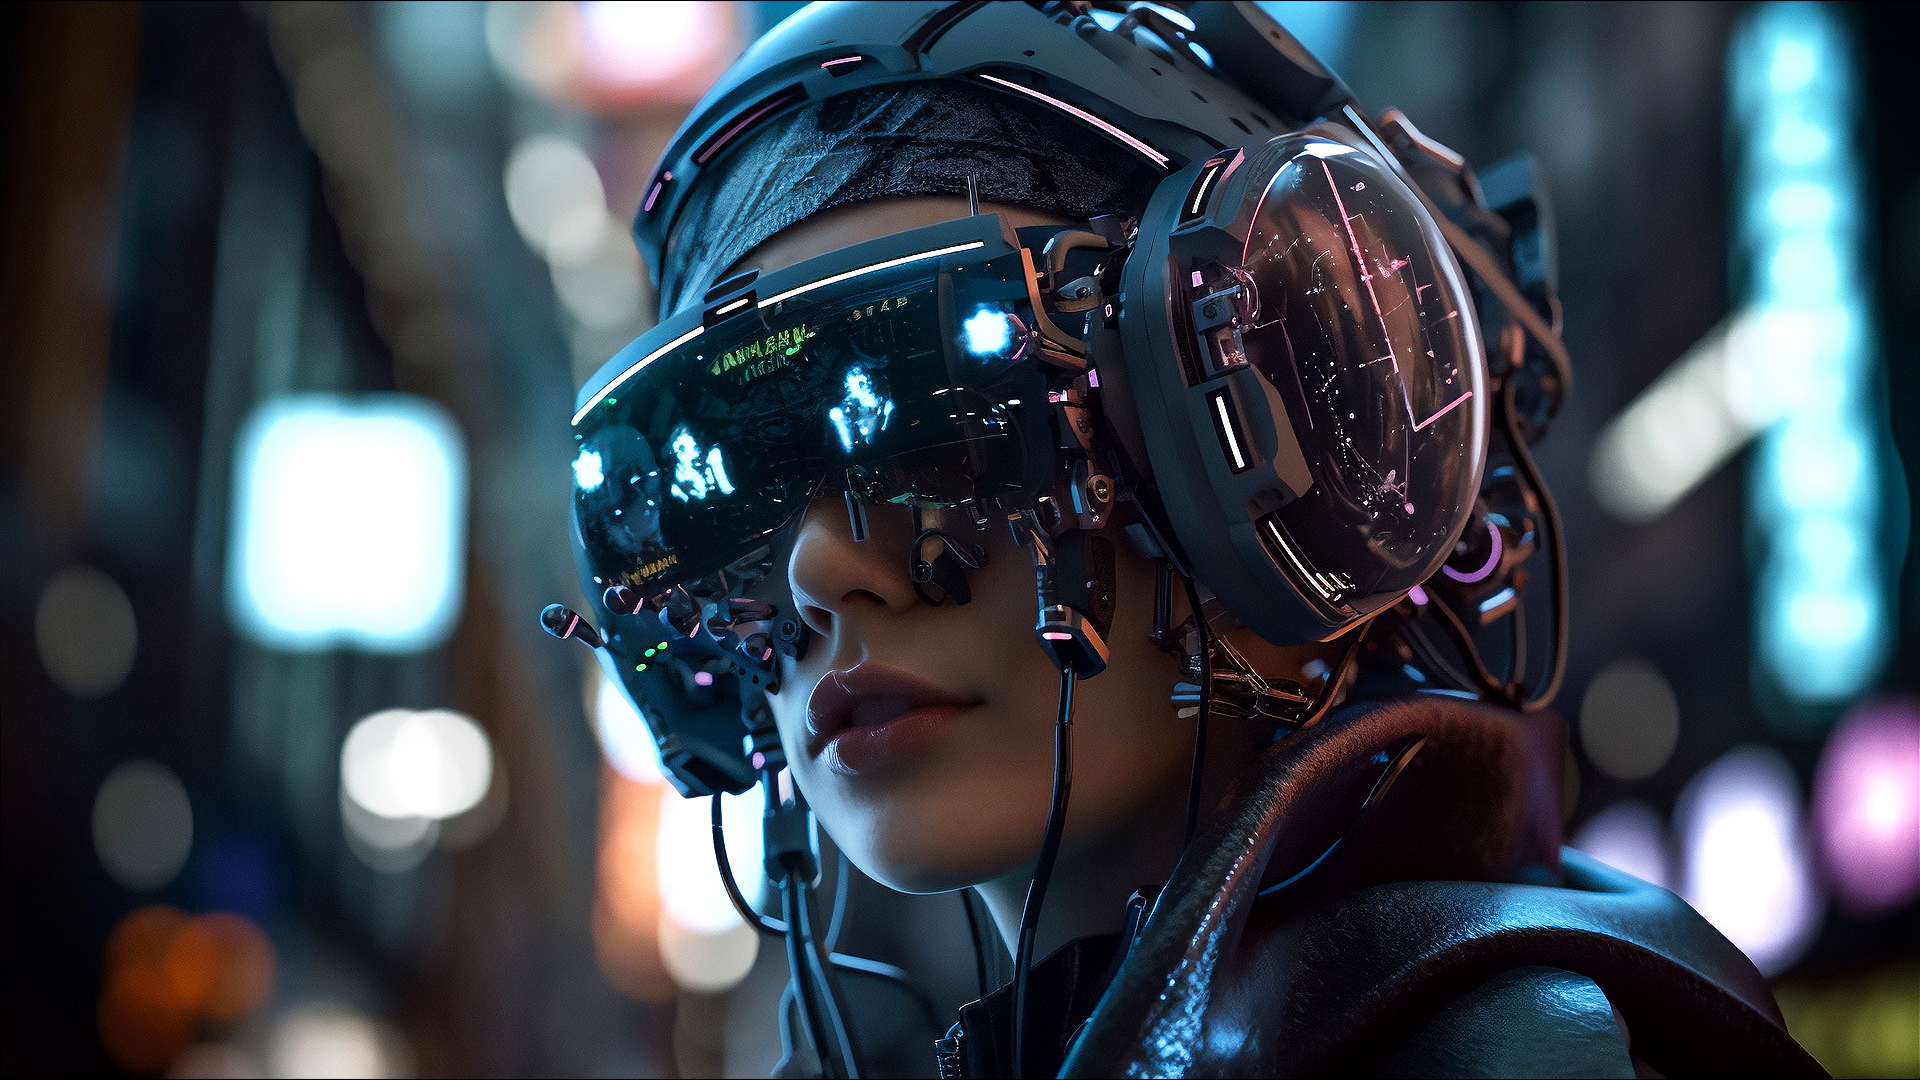 Free photo Futuristic portrait of a girl wearing future glasses and headphones